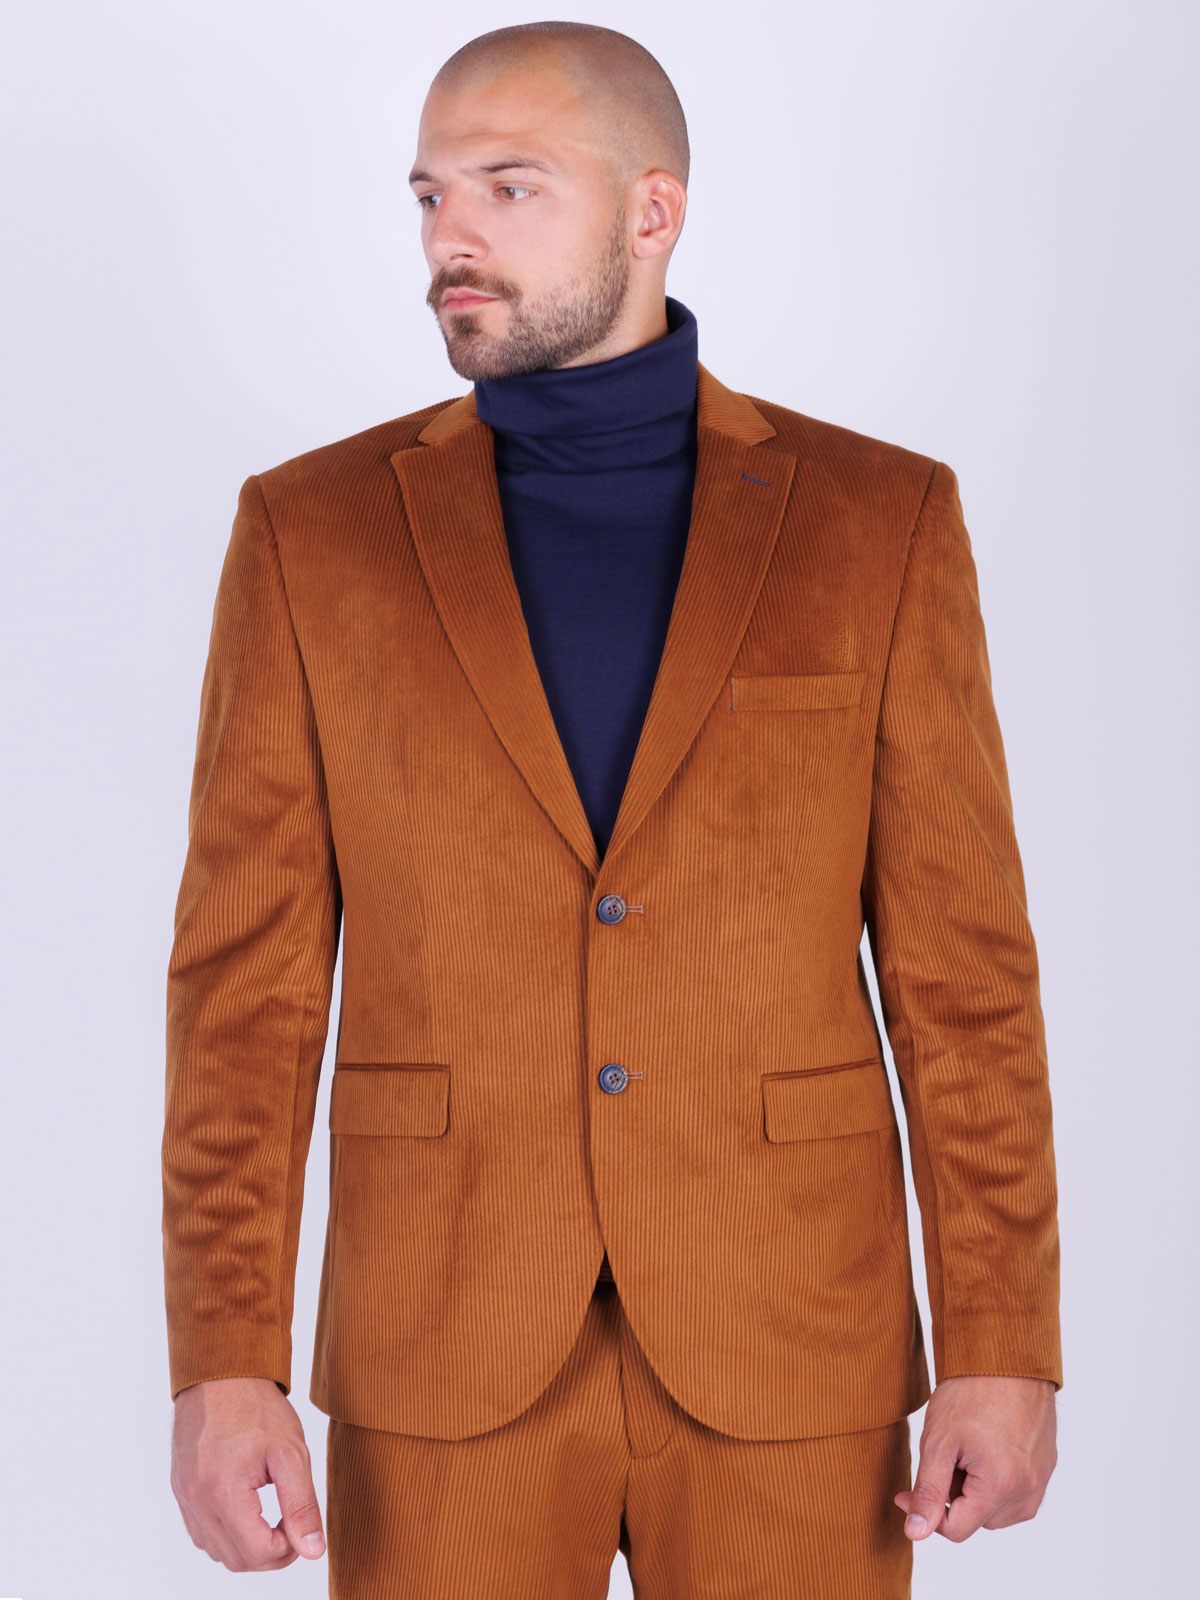 Twopiece suit in mustard color - 68067 € 191.22 img2